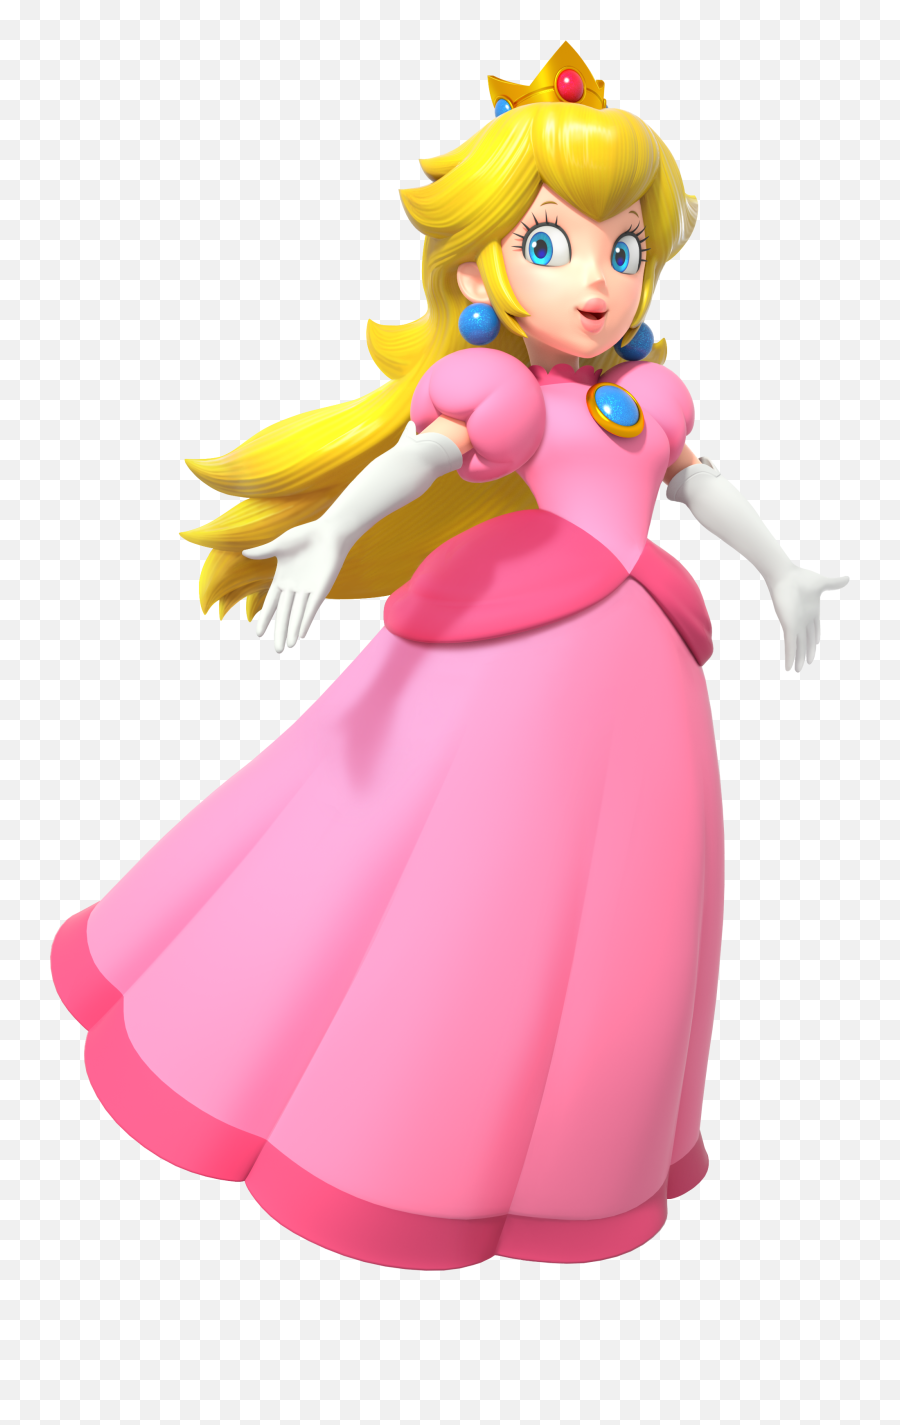 Super Princess Peach 2 - Princess Peach Emoji,Emotions Peach